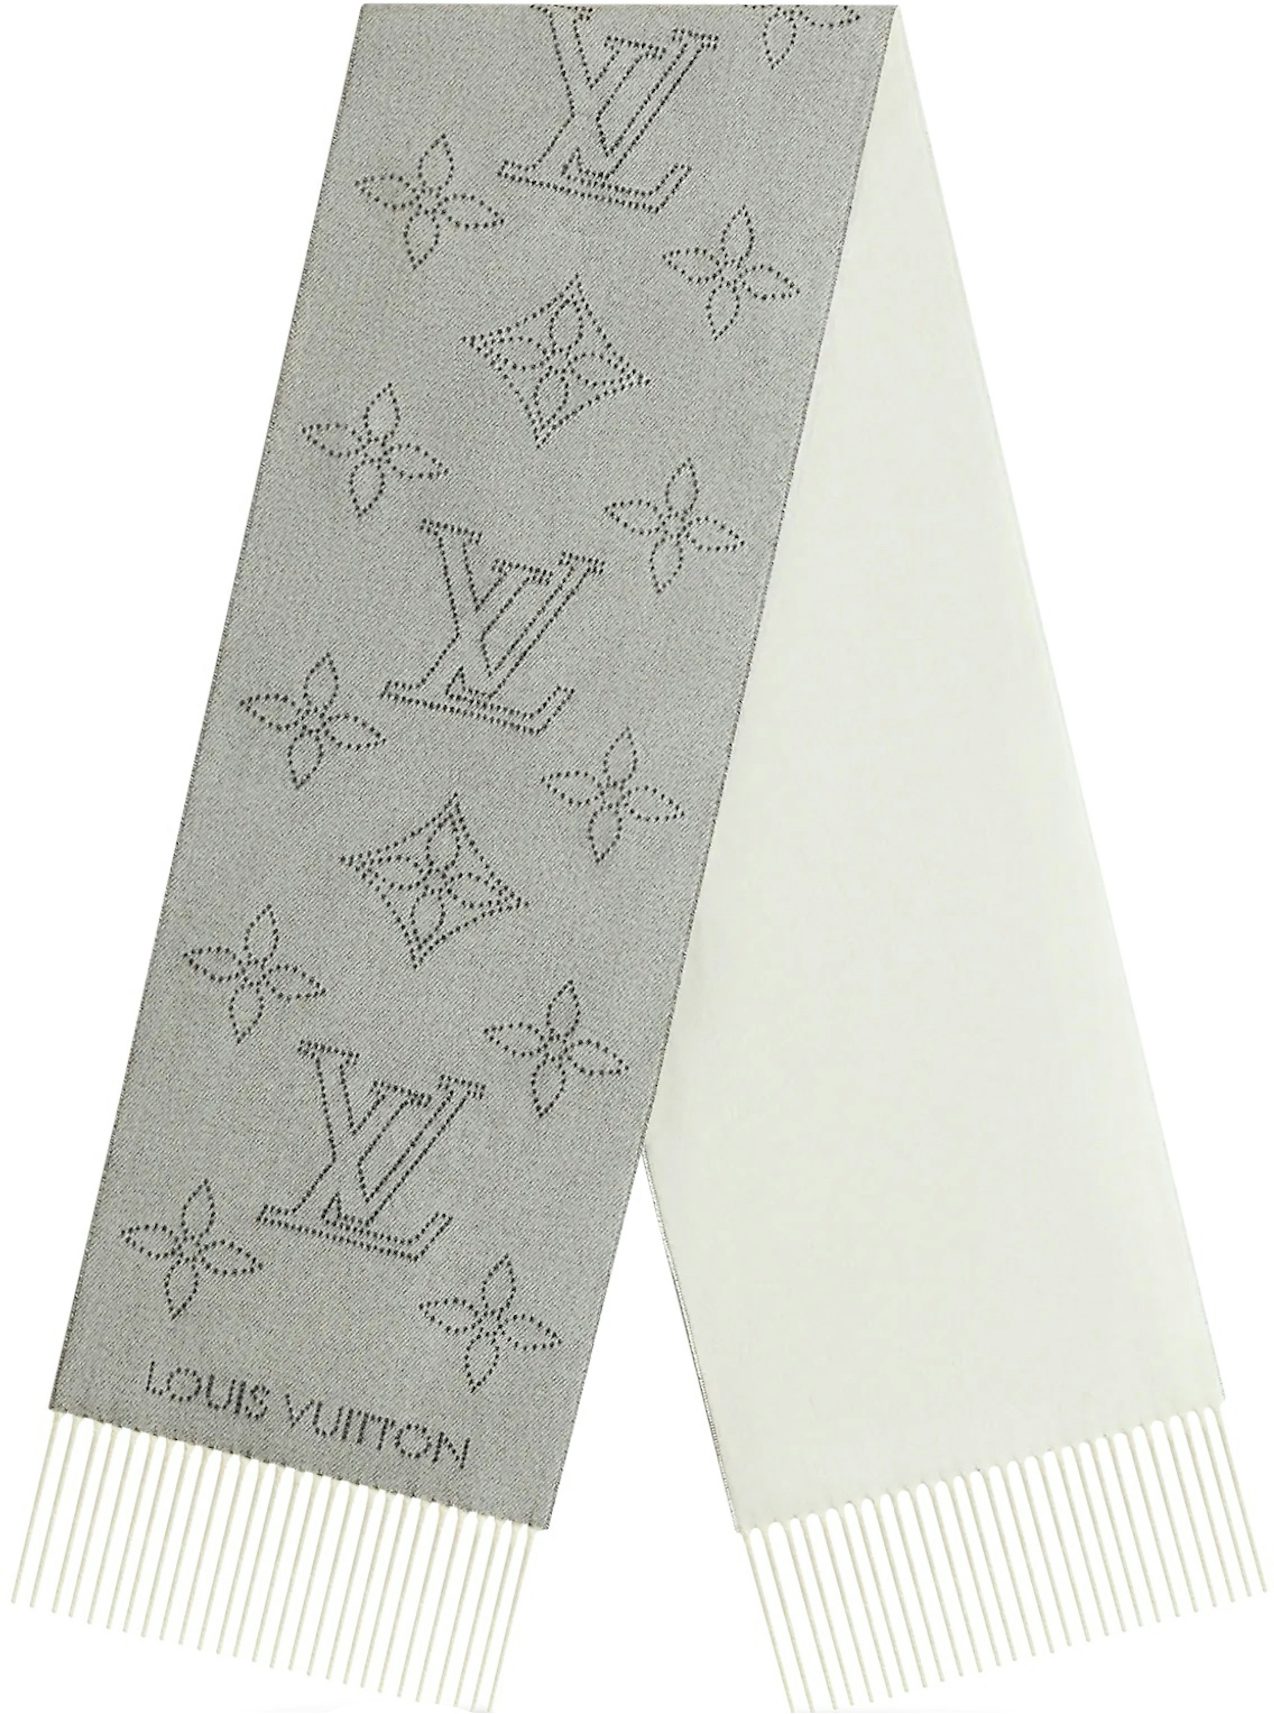 LV ultimate scarf beige cashmere wool monogram logo Louis Vuitton